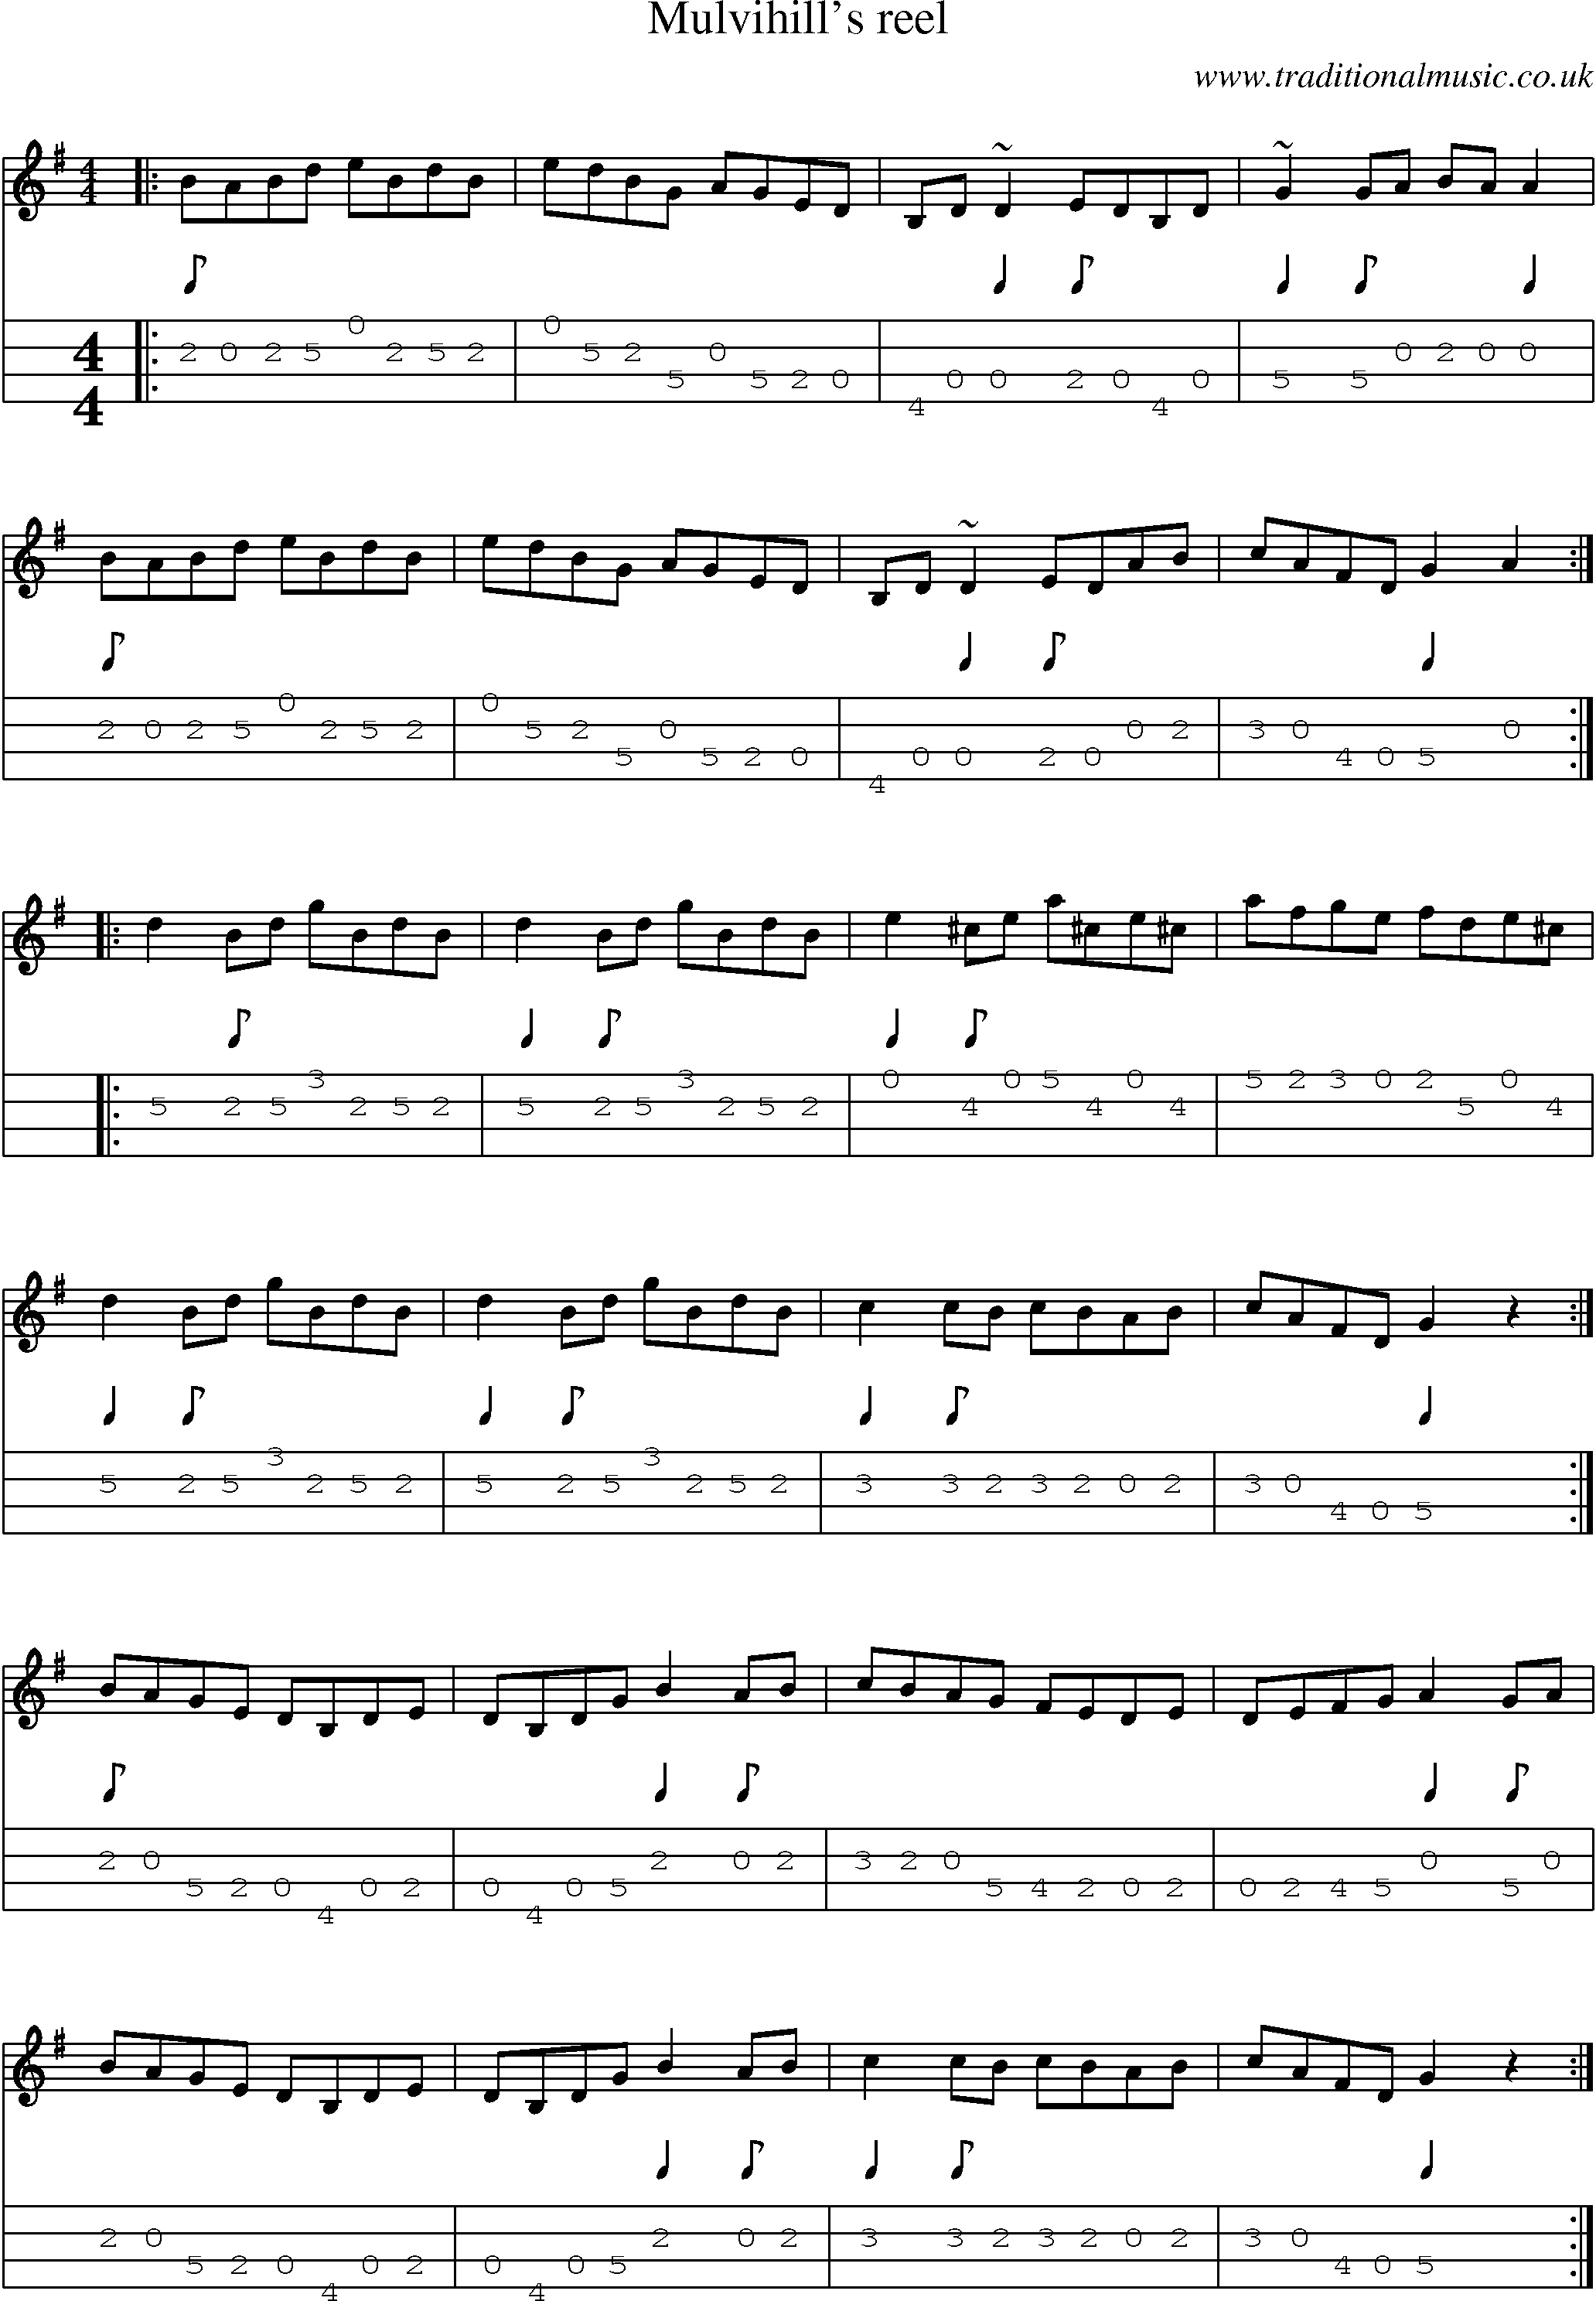 Music Score and Mandolin Tabs for Mulvihills Reel